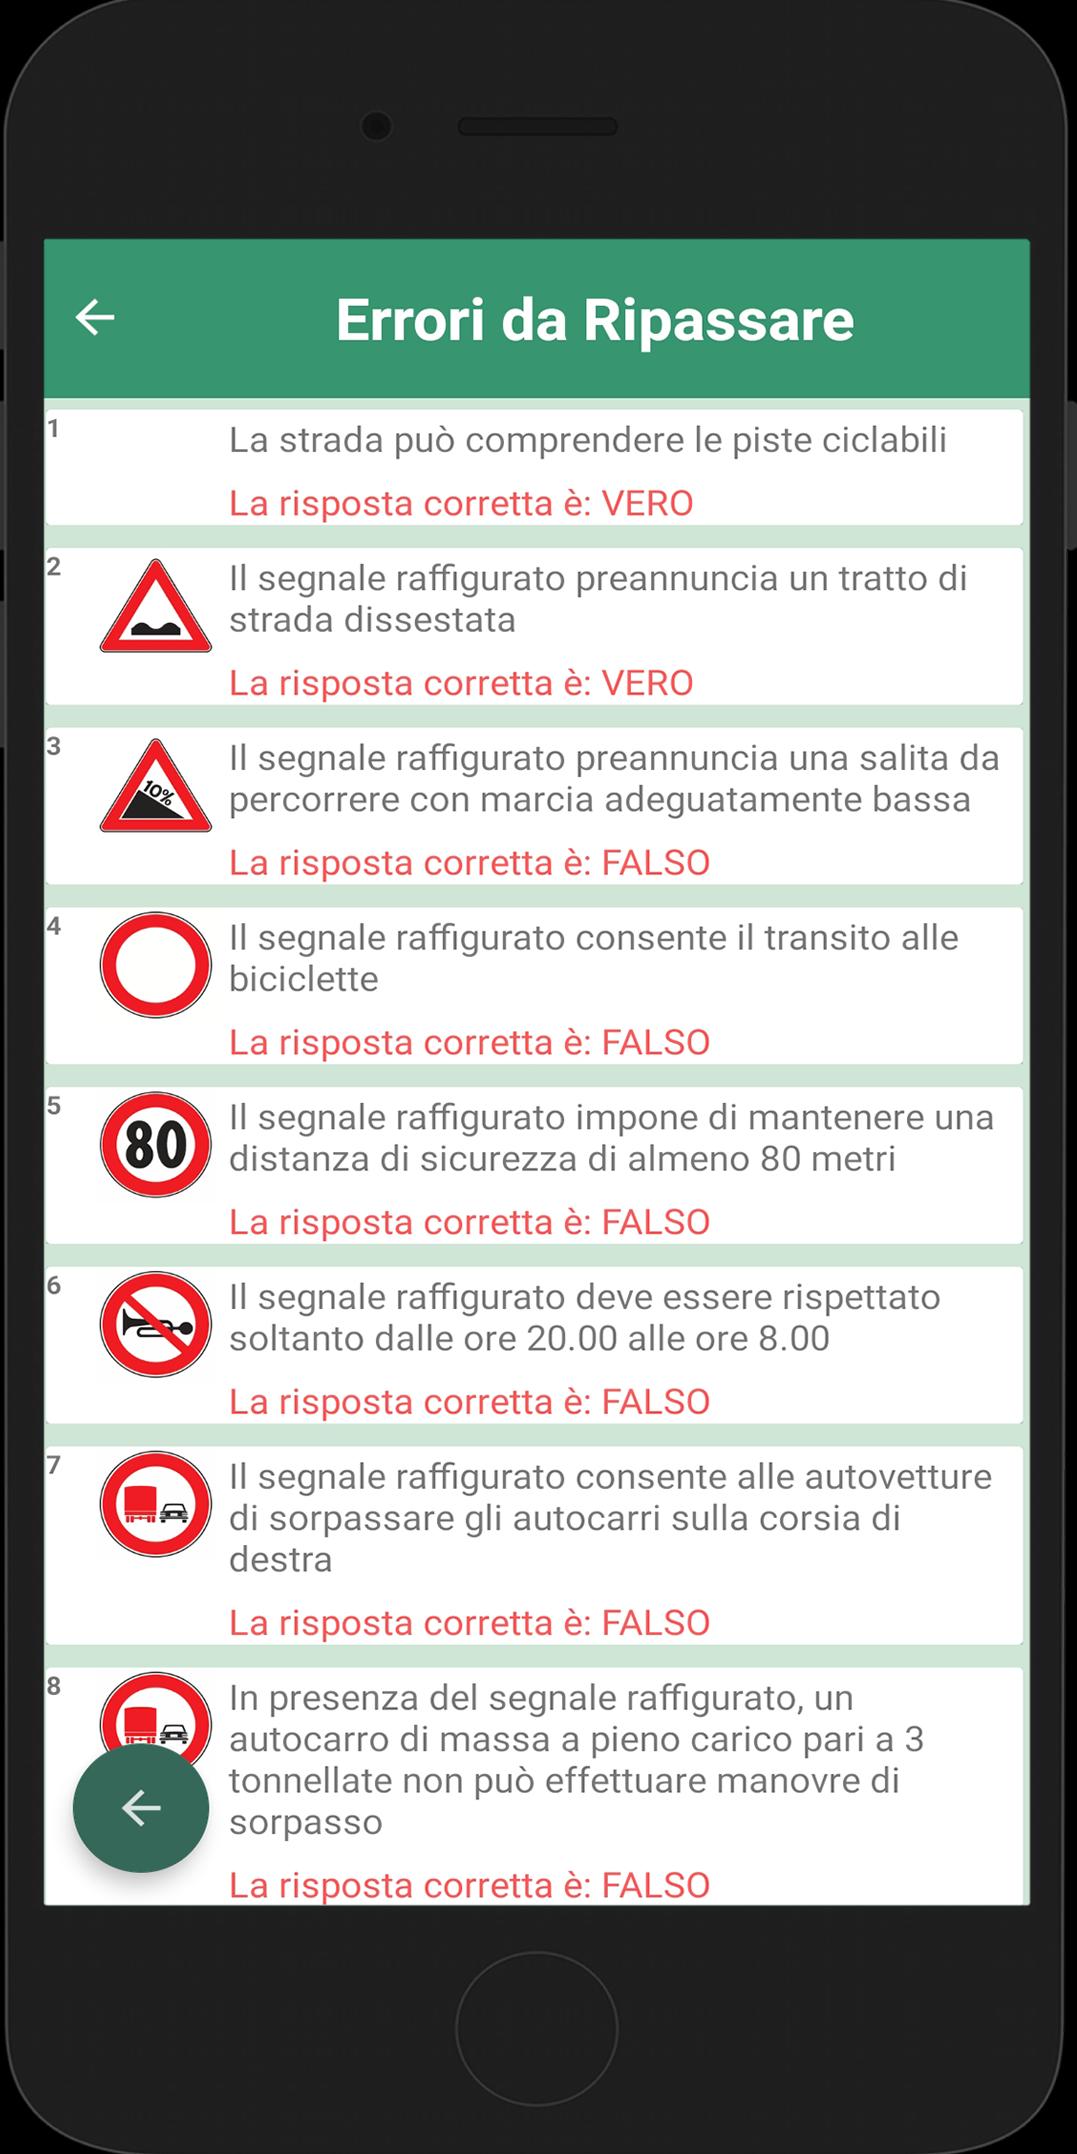 - italia: manqanis martvis theoriuli gamocdebis ufaso aplikacia “android iPhone iPad”